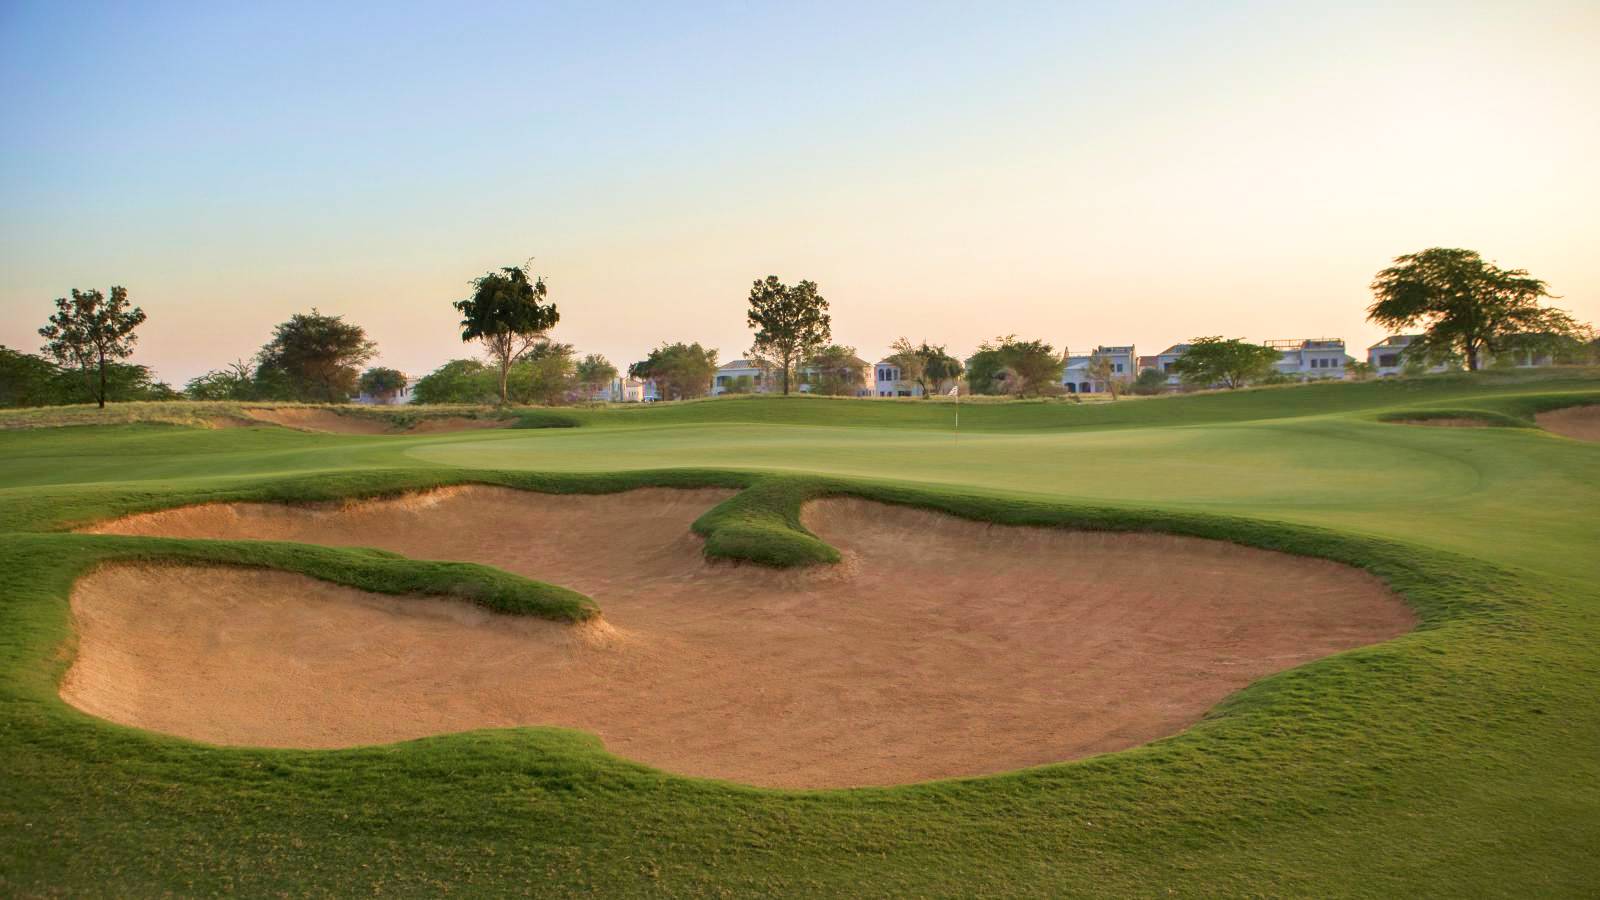 Greenside Bunker, Jumeirah Golf Estates (Fire Course), Dubai, United Arab Emirates